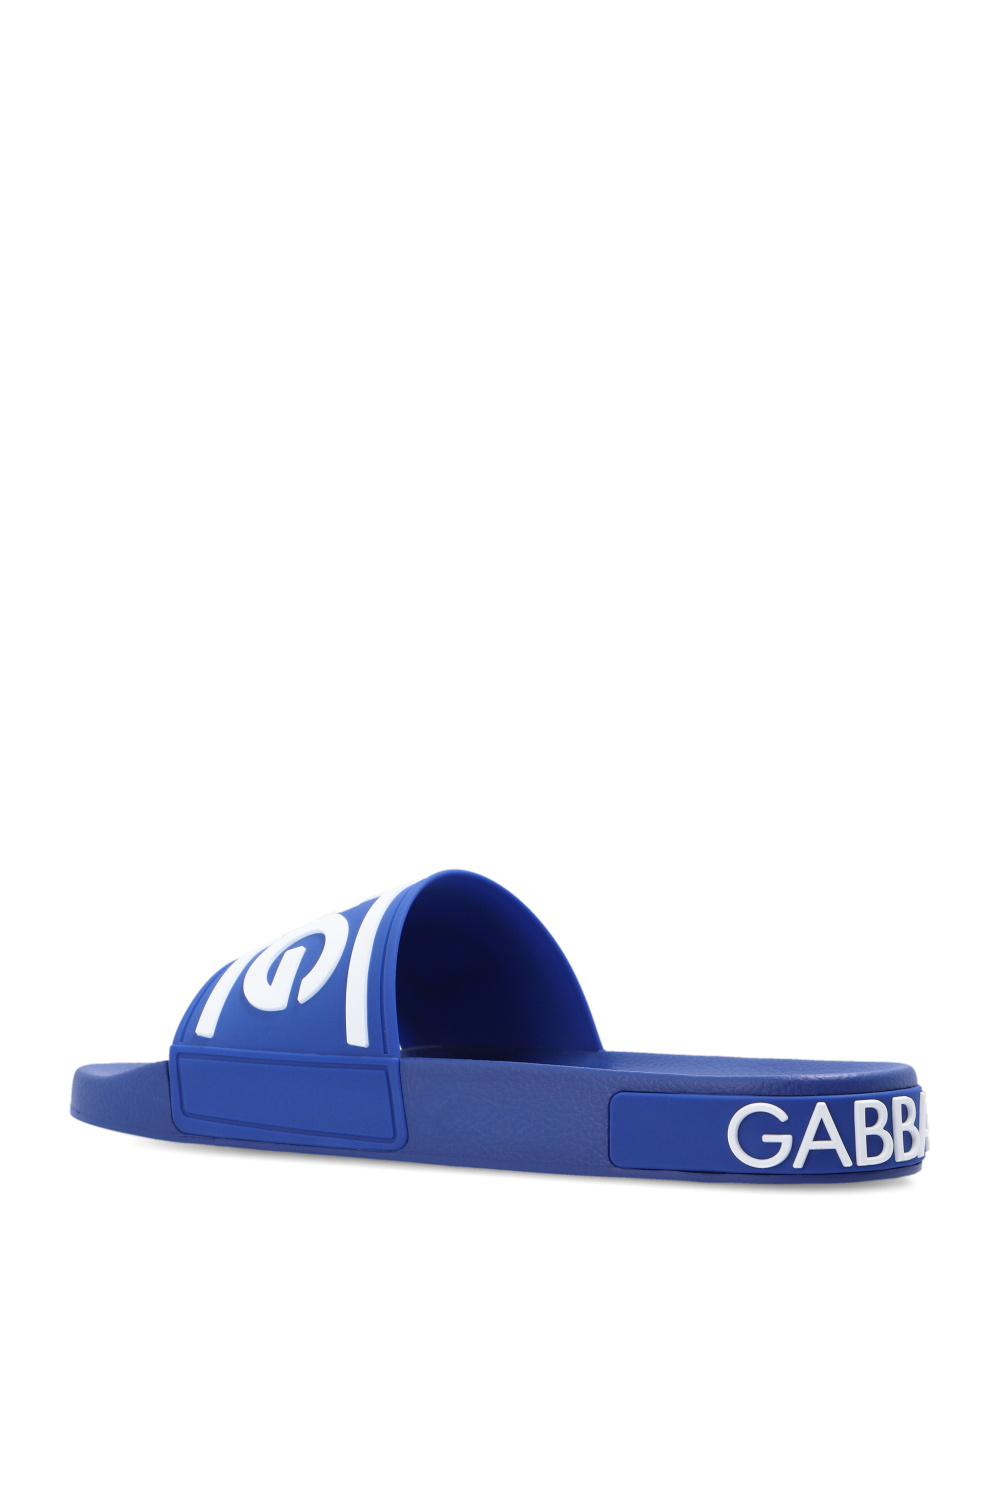 dolce & gabbana black jeans ‘Ciabatta’ slides with logo